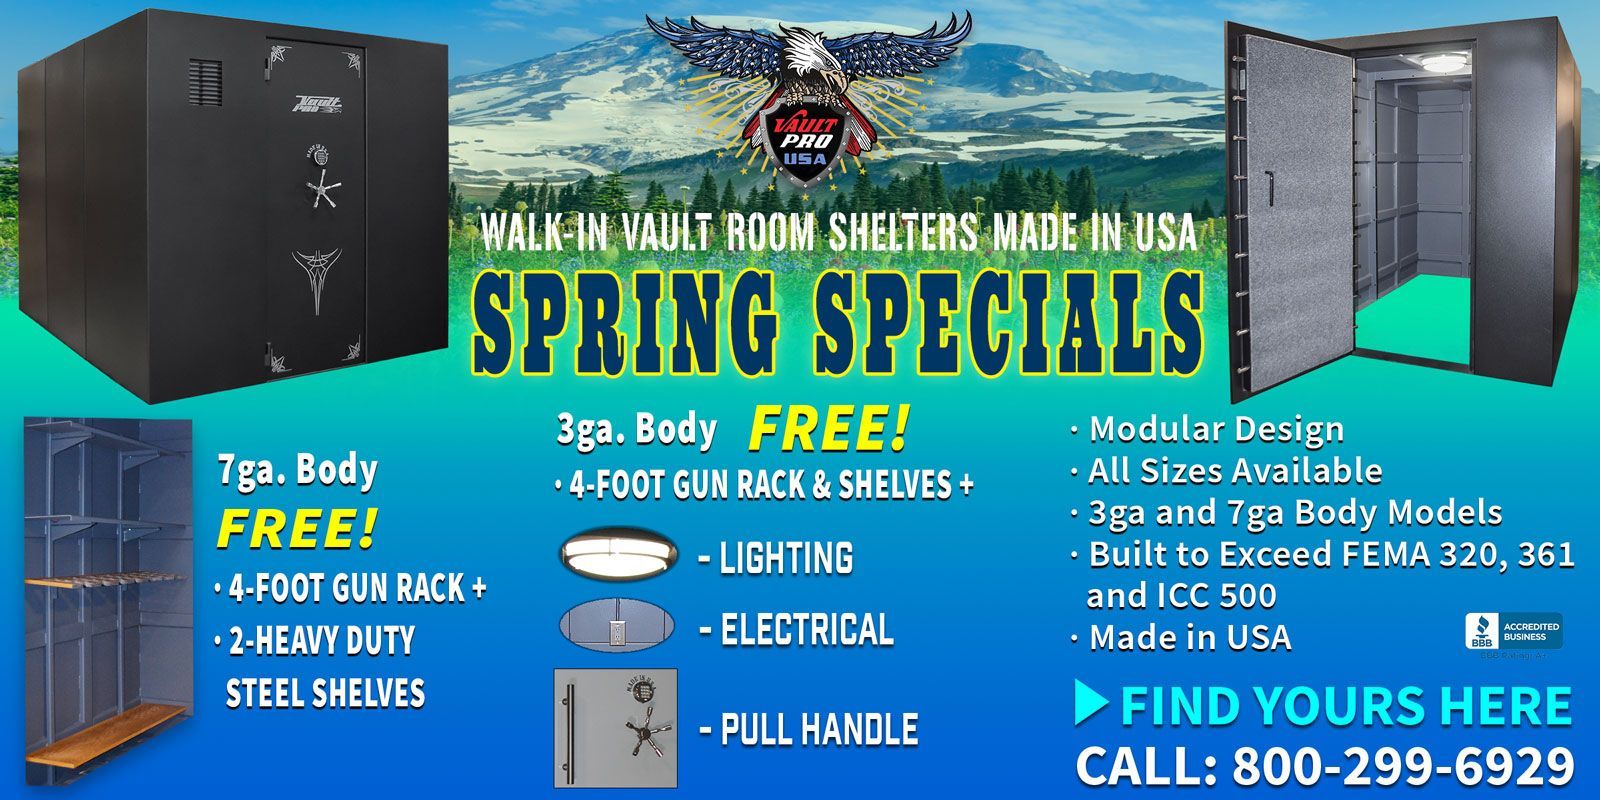 Vault door special promotion, free digital lock, pull handle and pistol door back on selected models. American made vault doors by Vault Pro USA